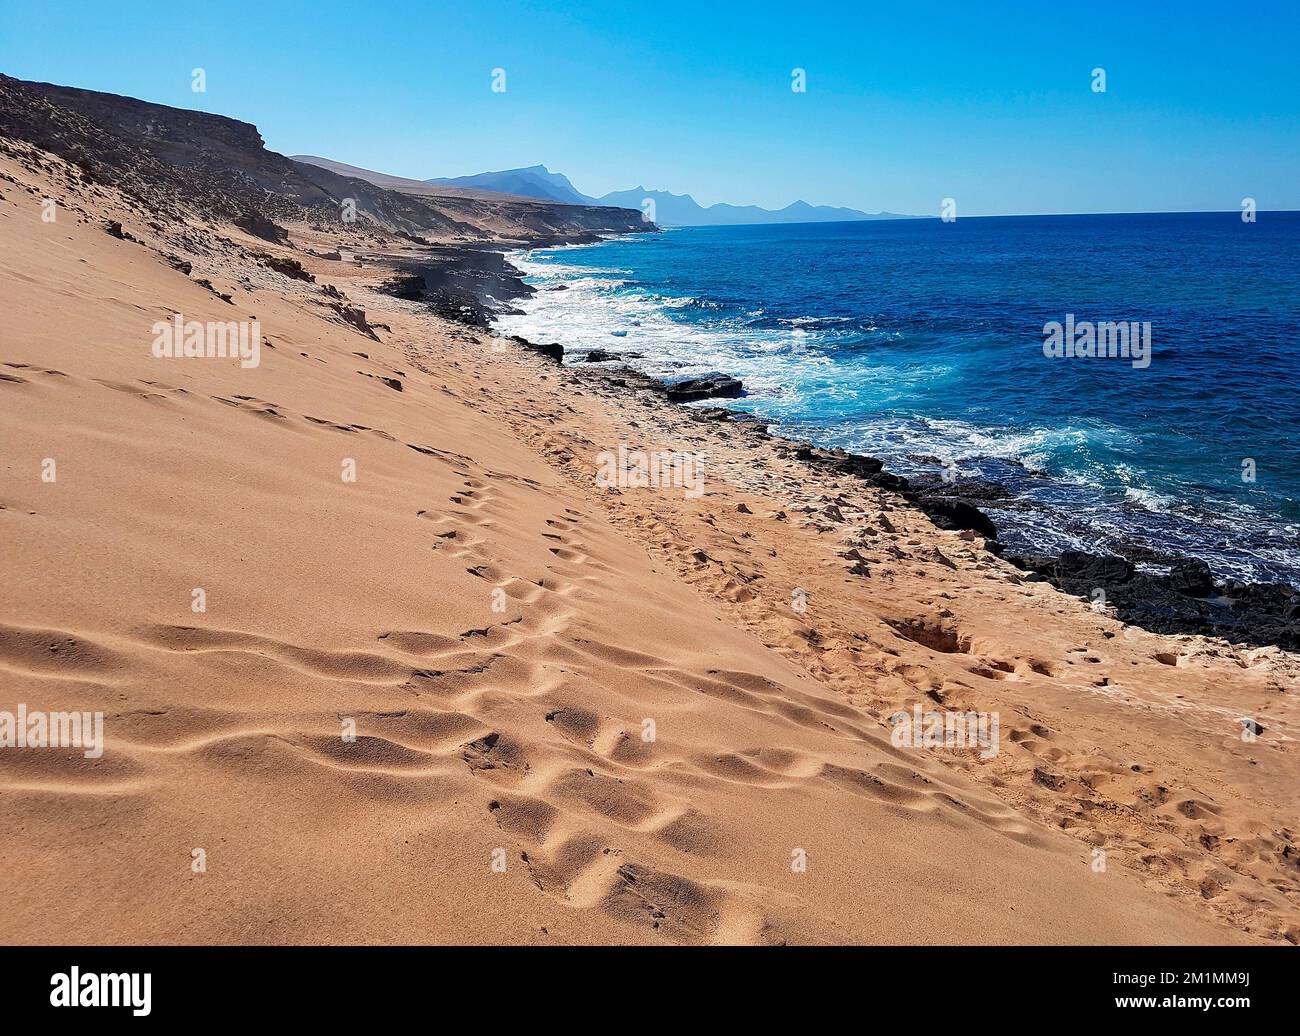 Impressionen:  Atantischer Ozean bei Istmo de la Pared, Jandia, Fuerteventura, Kanarische Inseln, Spanien/ Fuerteventura, Canary Islands, Spain  (nur Stock Photo